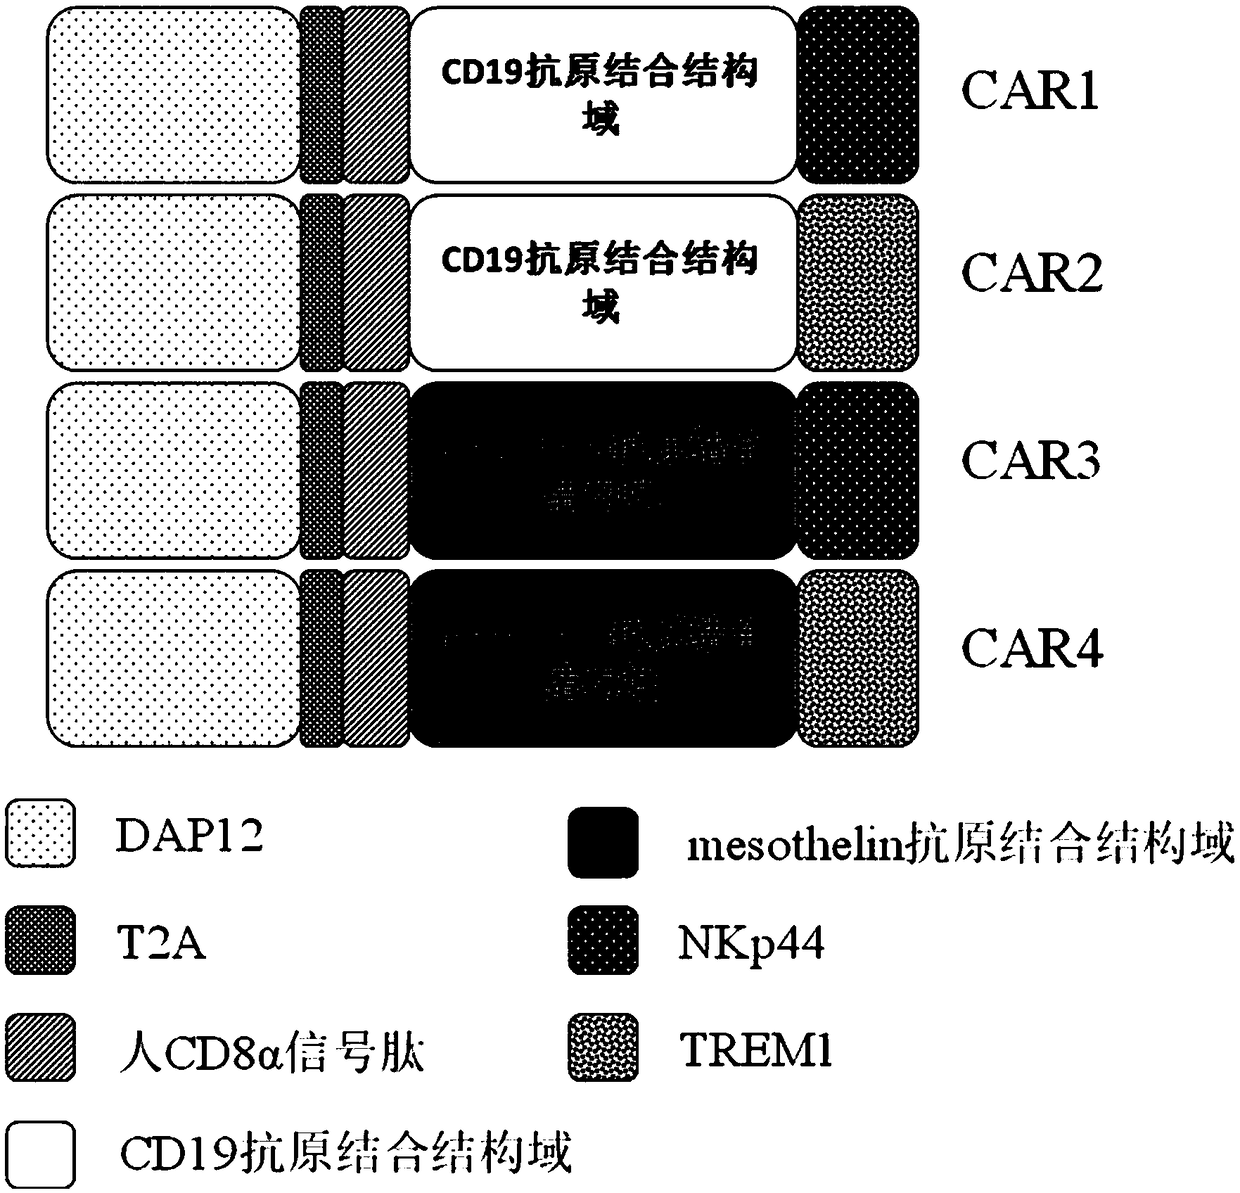 Application of novel CAR (Chimeric Antigen Receptor) modified T cells for treating cancer